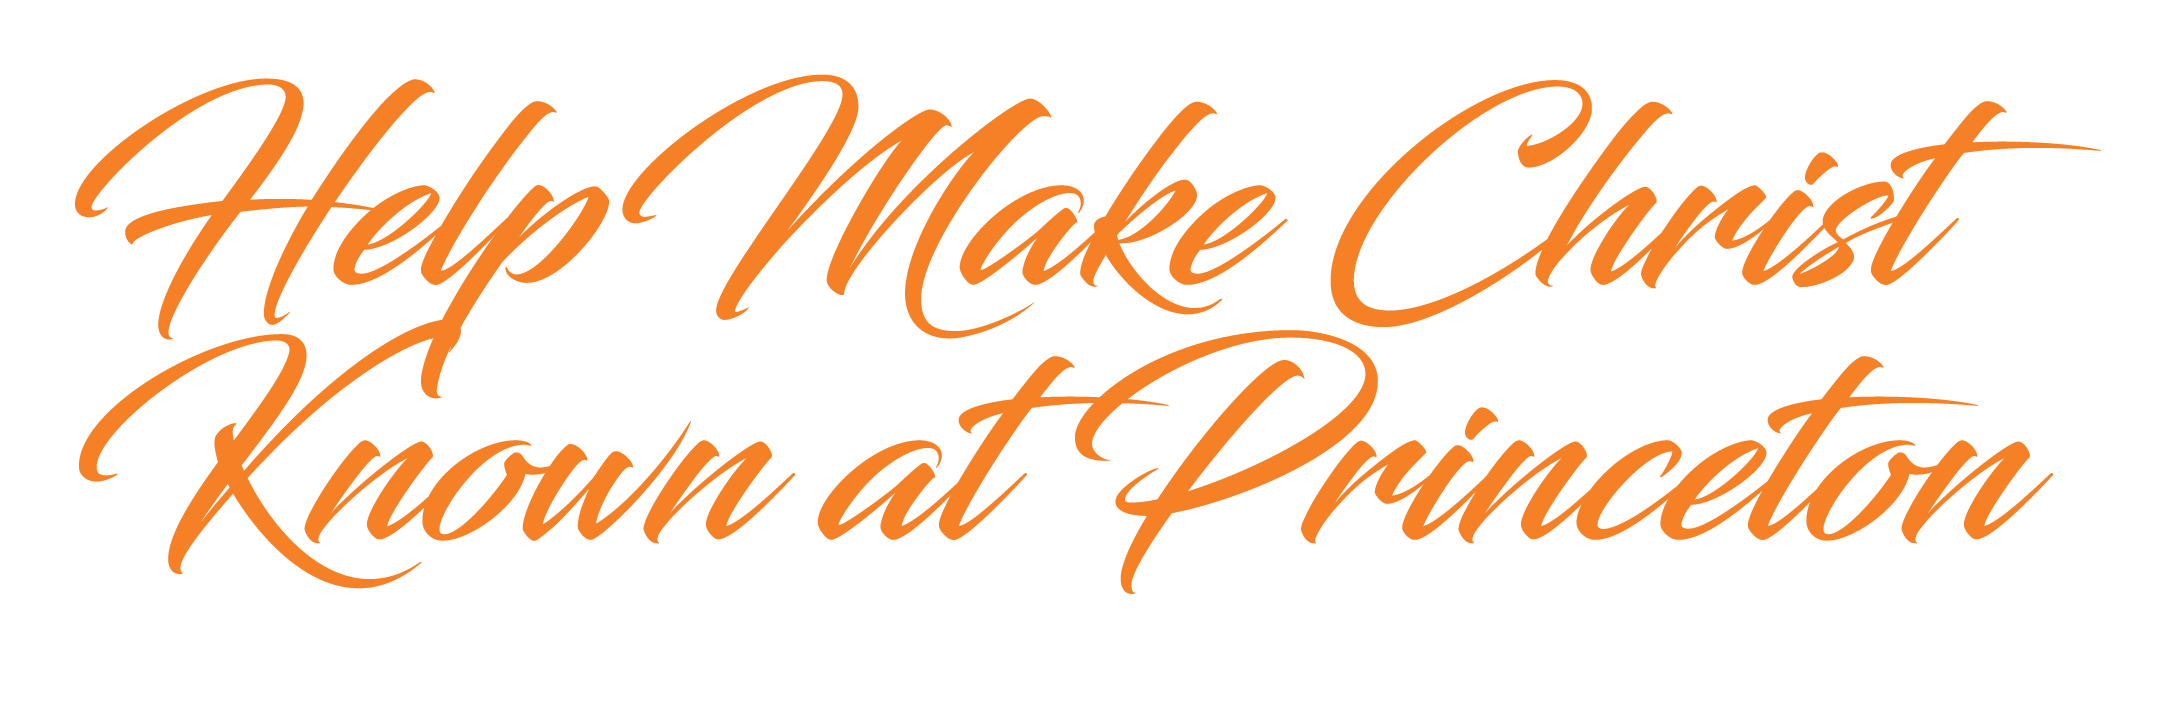 Help Make Christ Known at Princeton